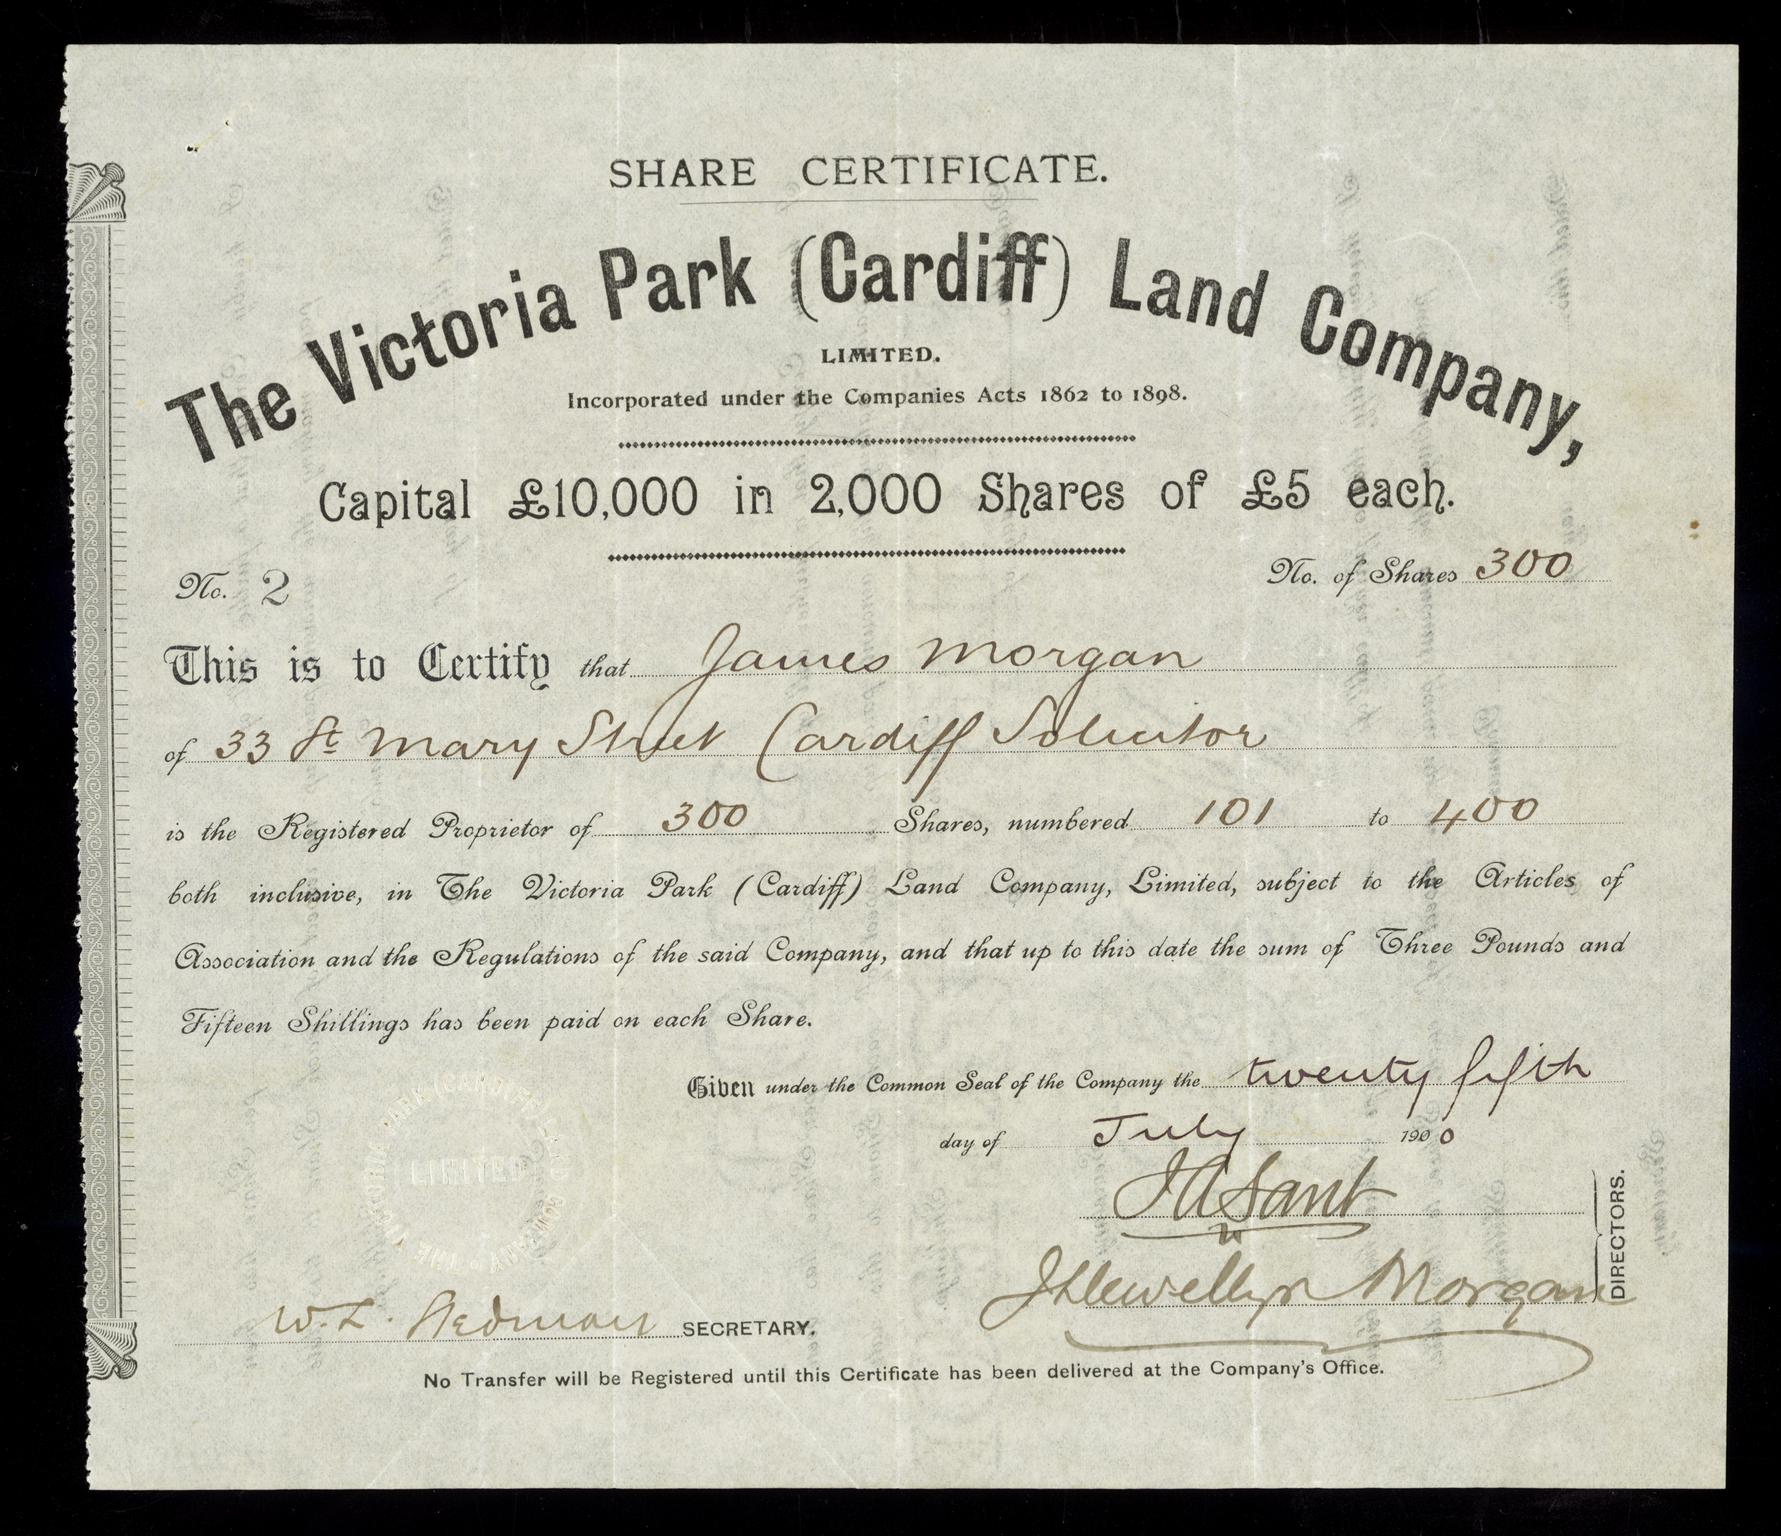 Victoria Park (Cardiff) Land Co. Ltd., share cert